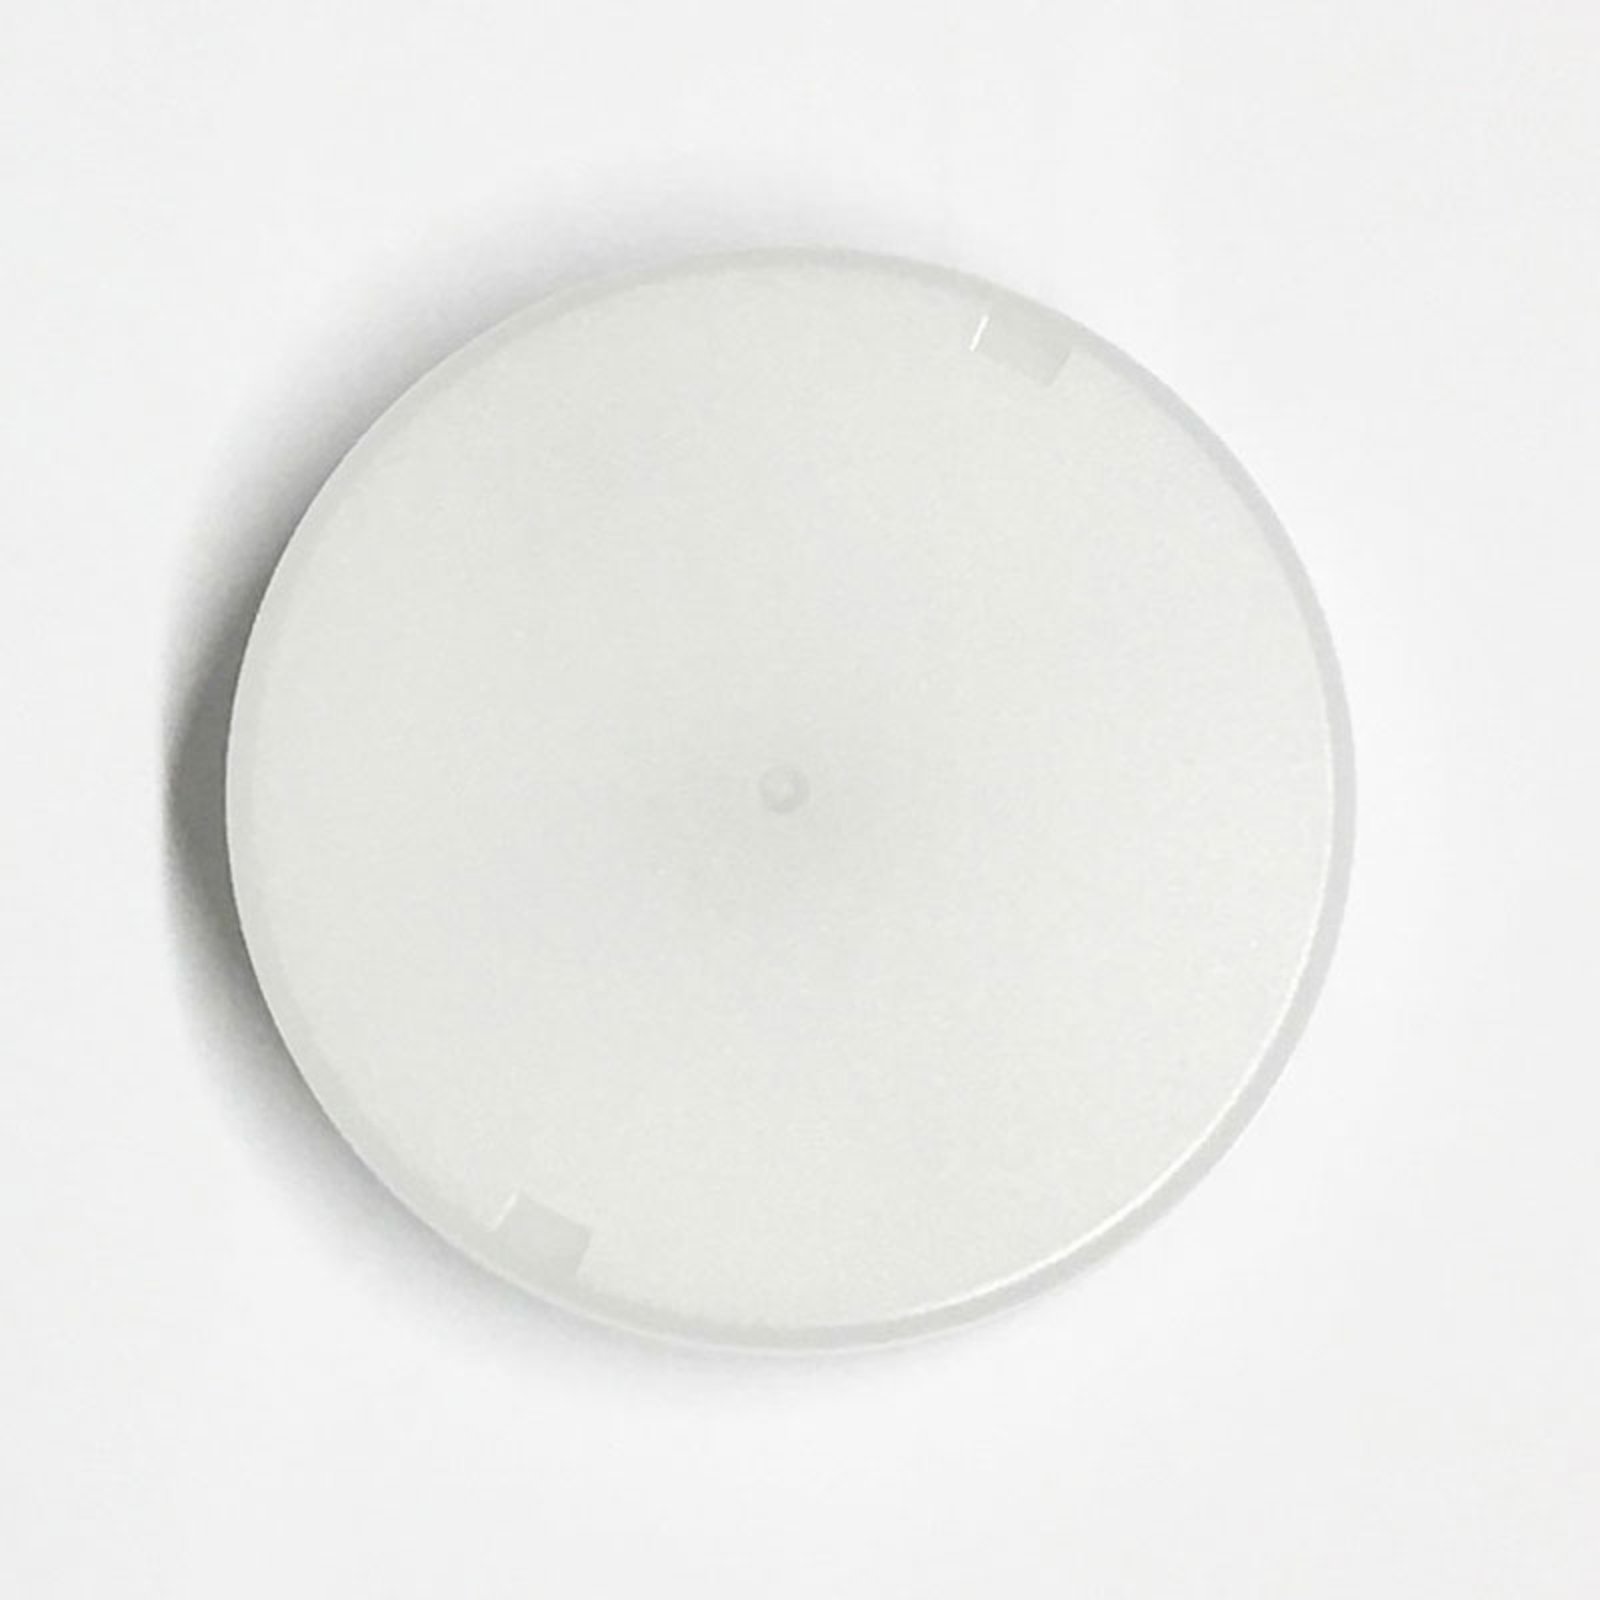 LED-Wandleuchte Circle, weiß, einflammig, dimmbar